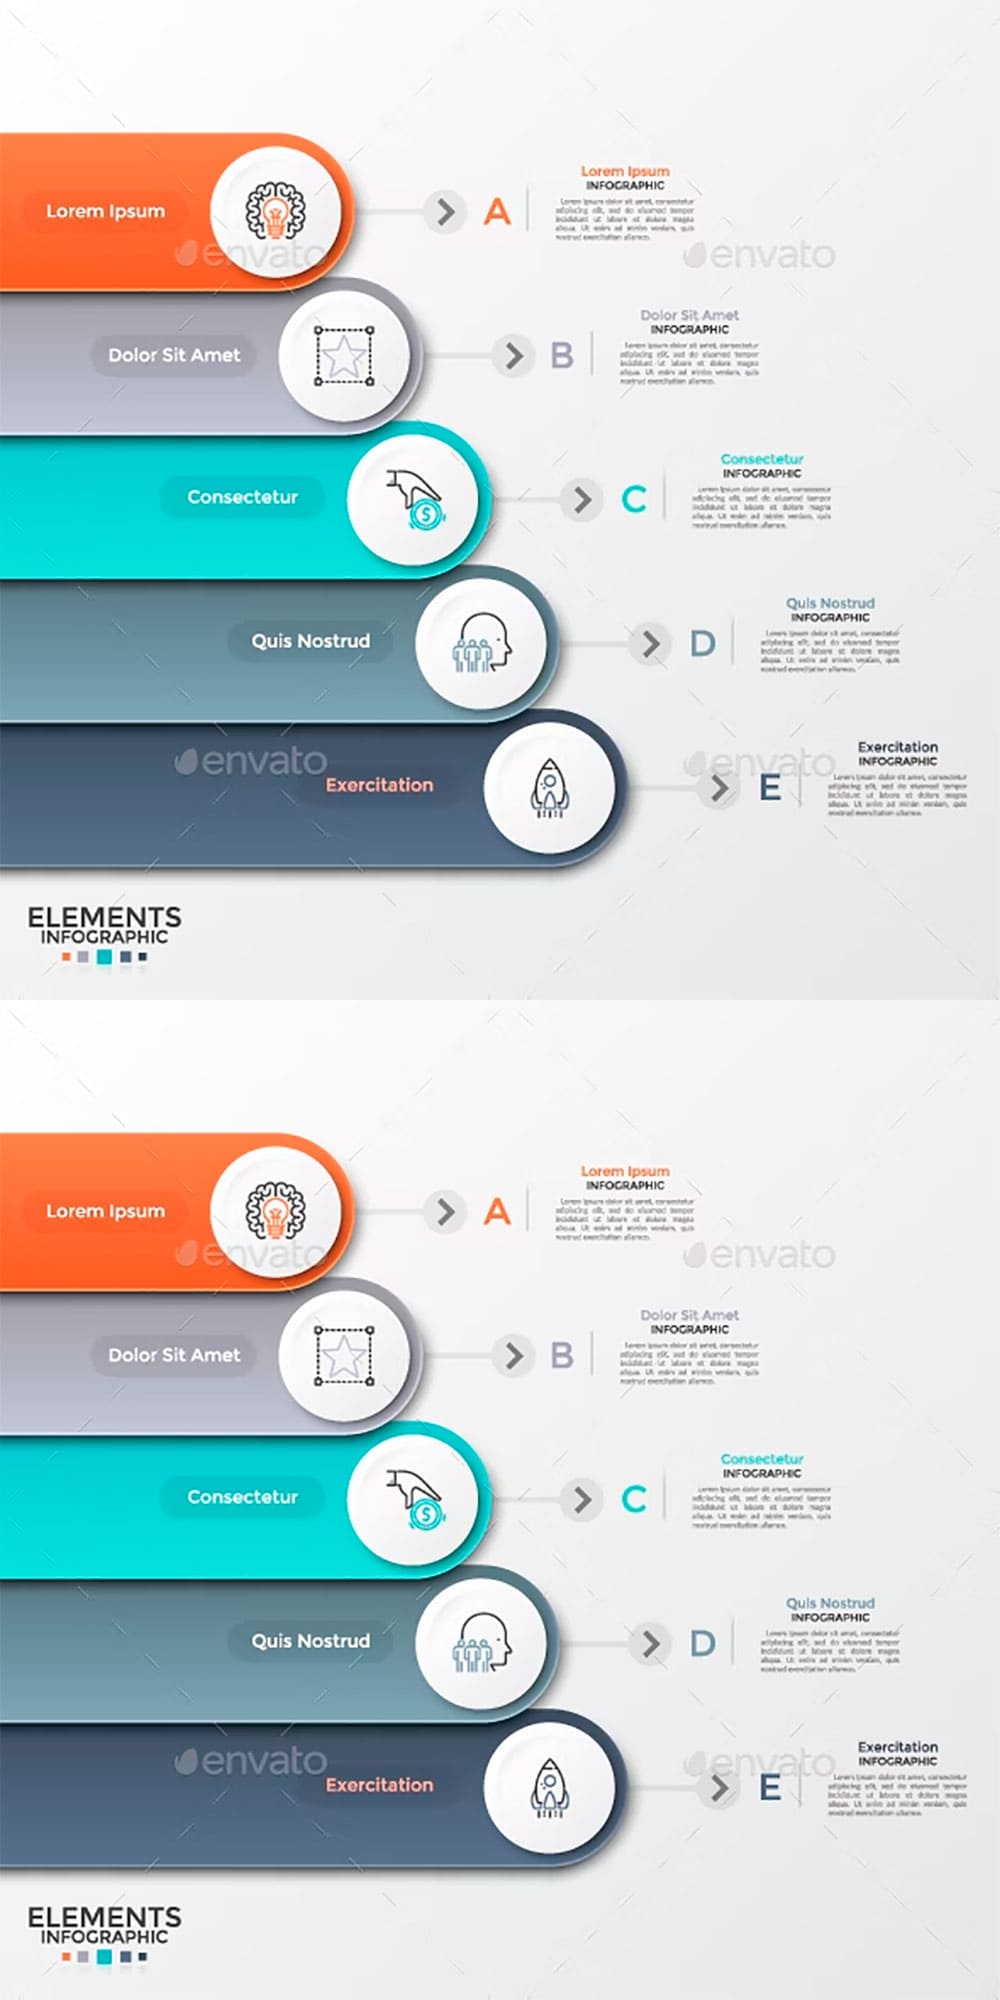 modern infographic design